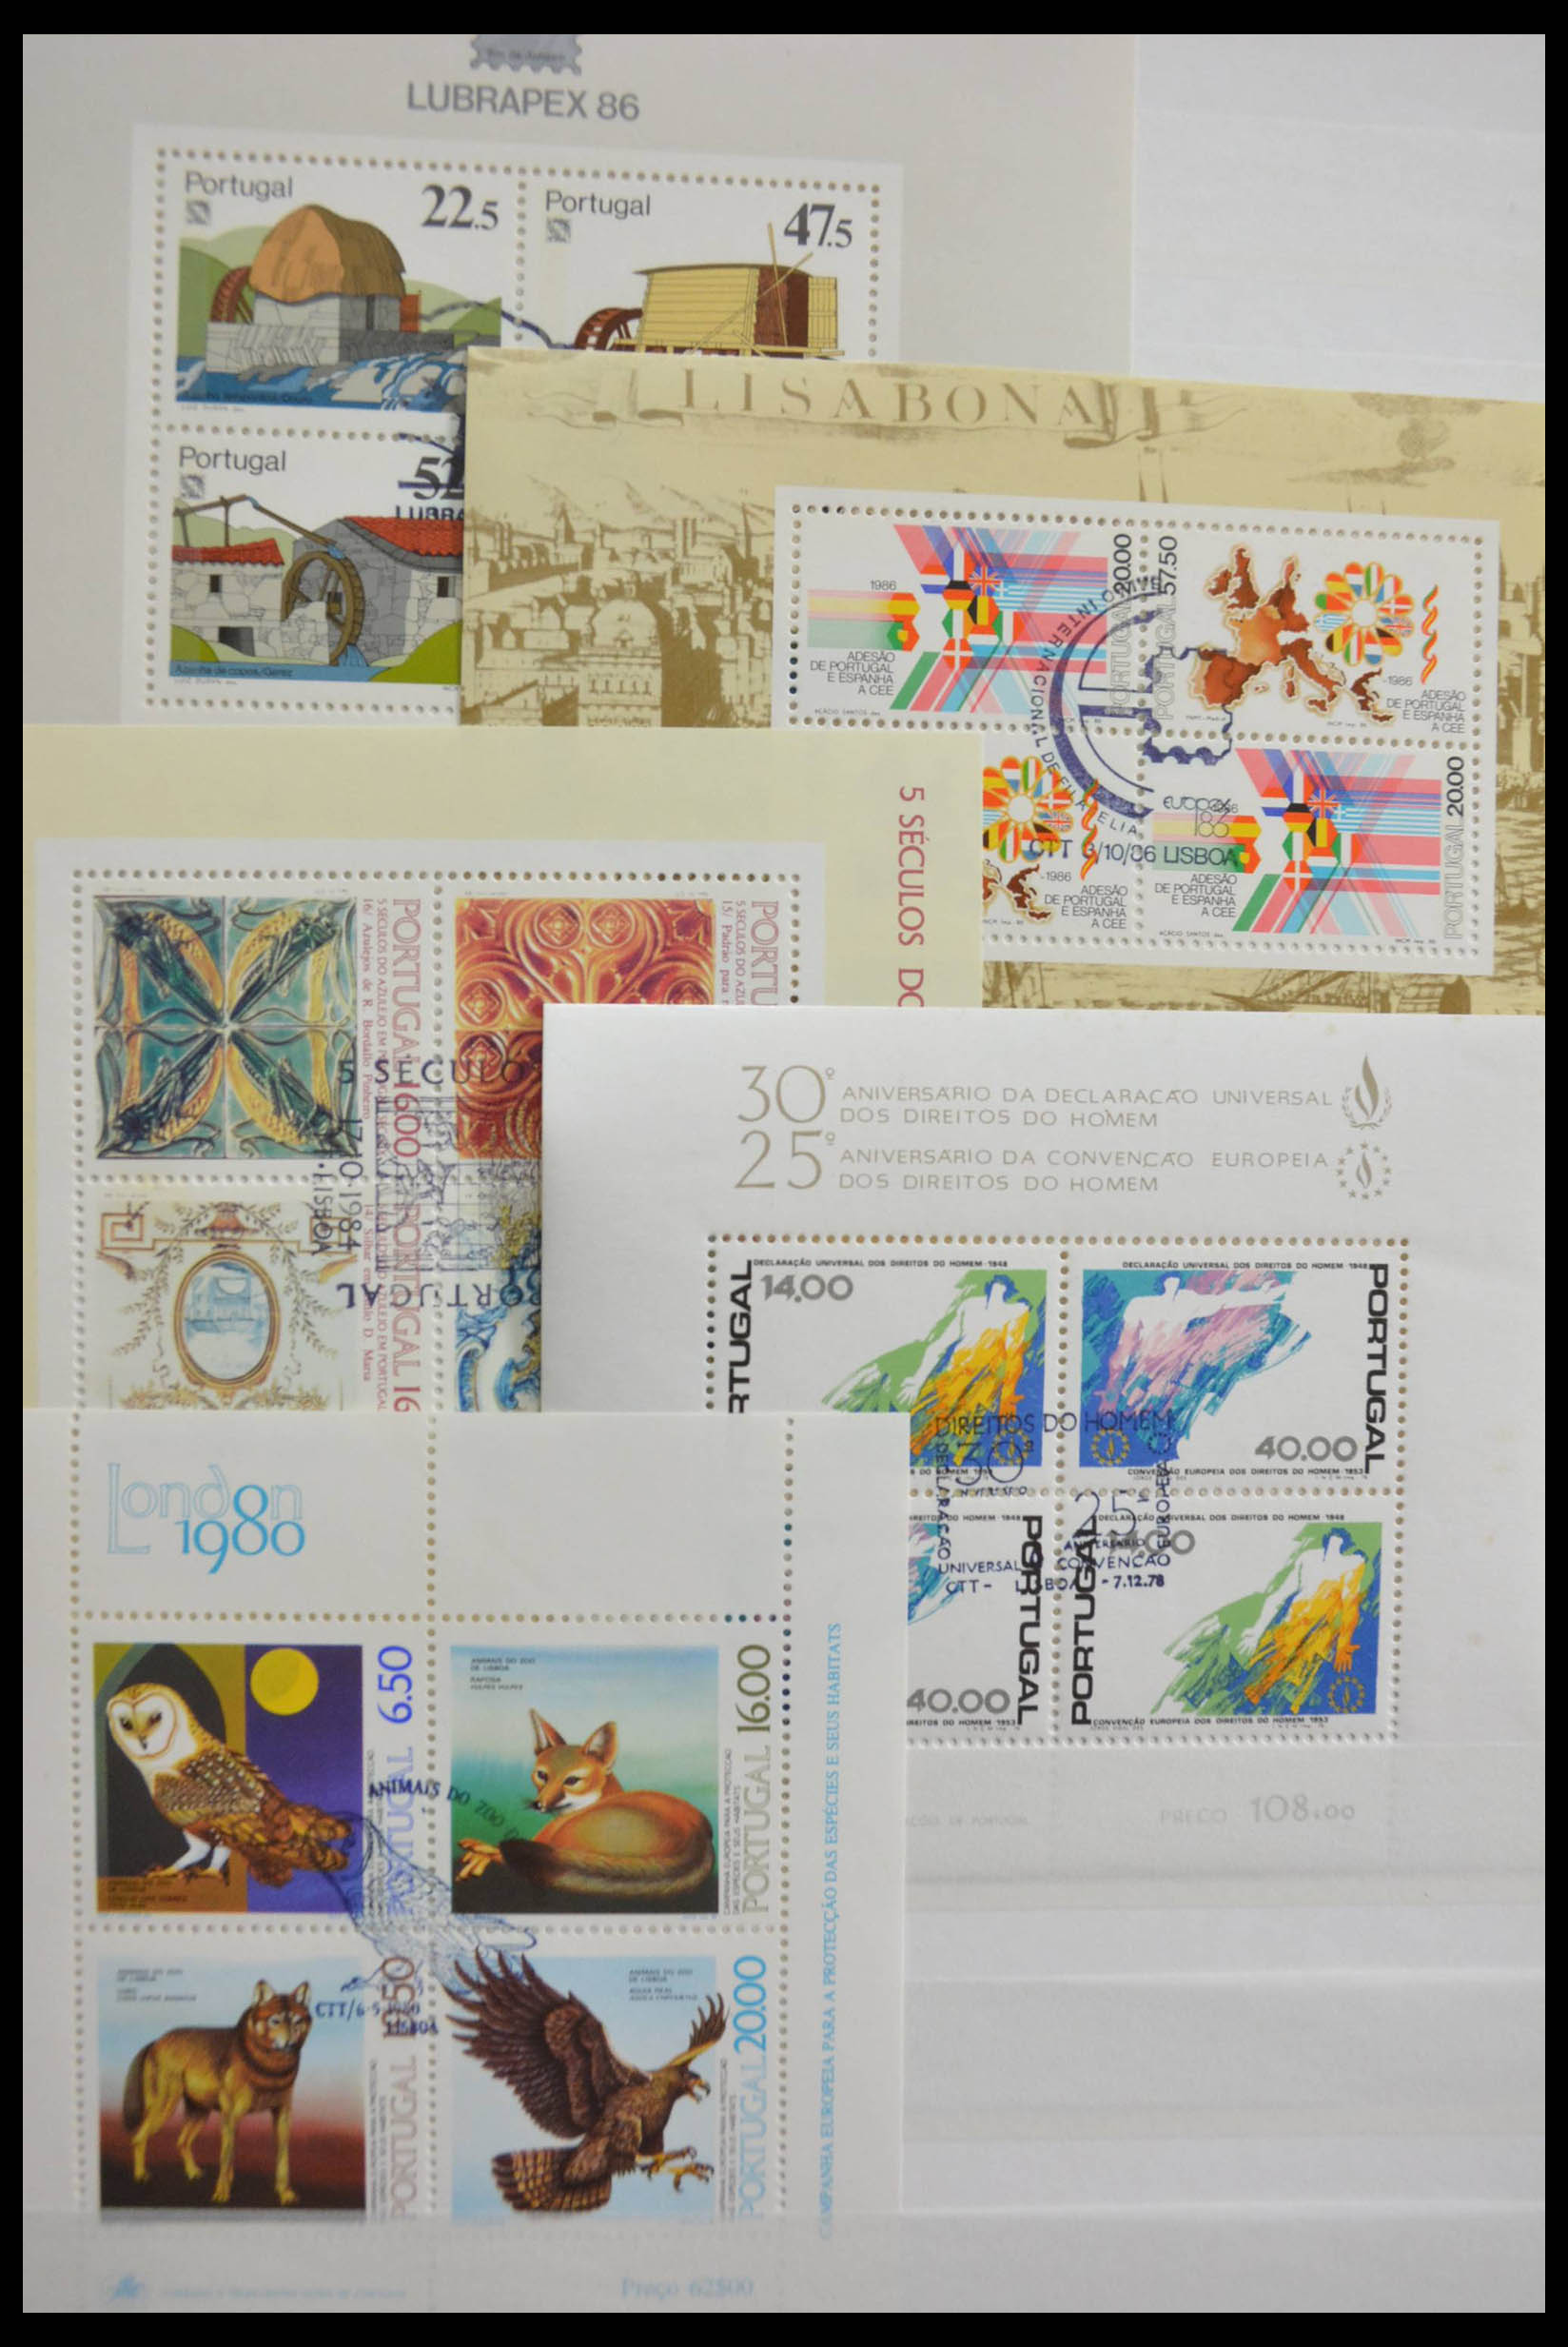 28540 107 - 28540 Portugal souvenir sheets.